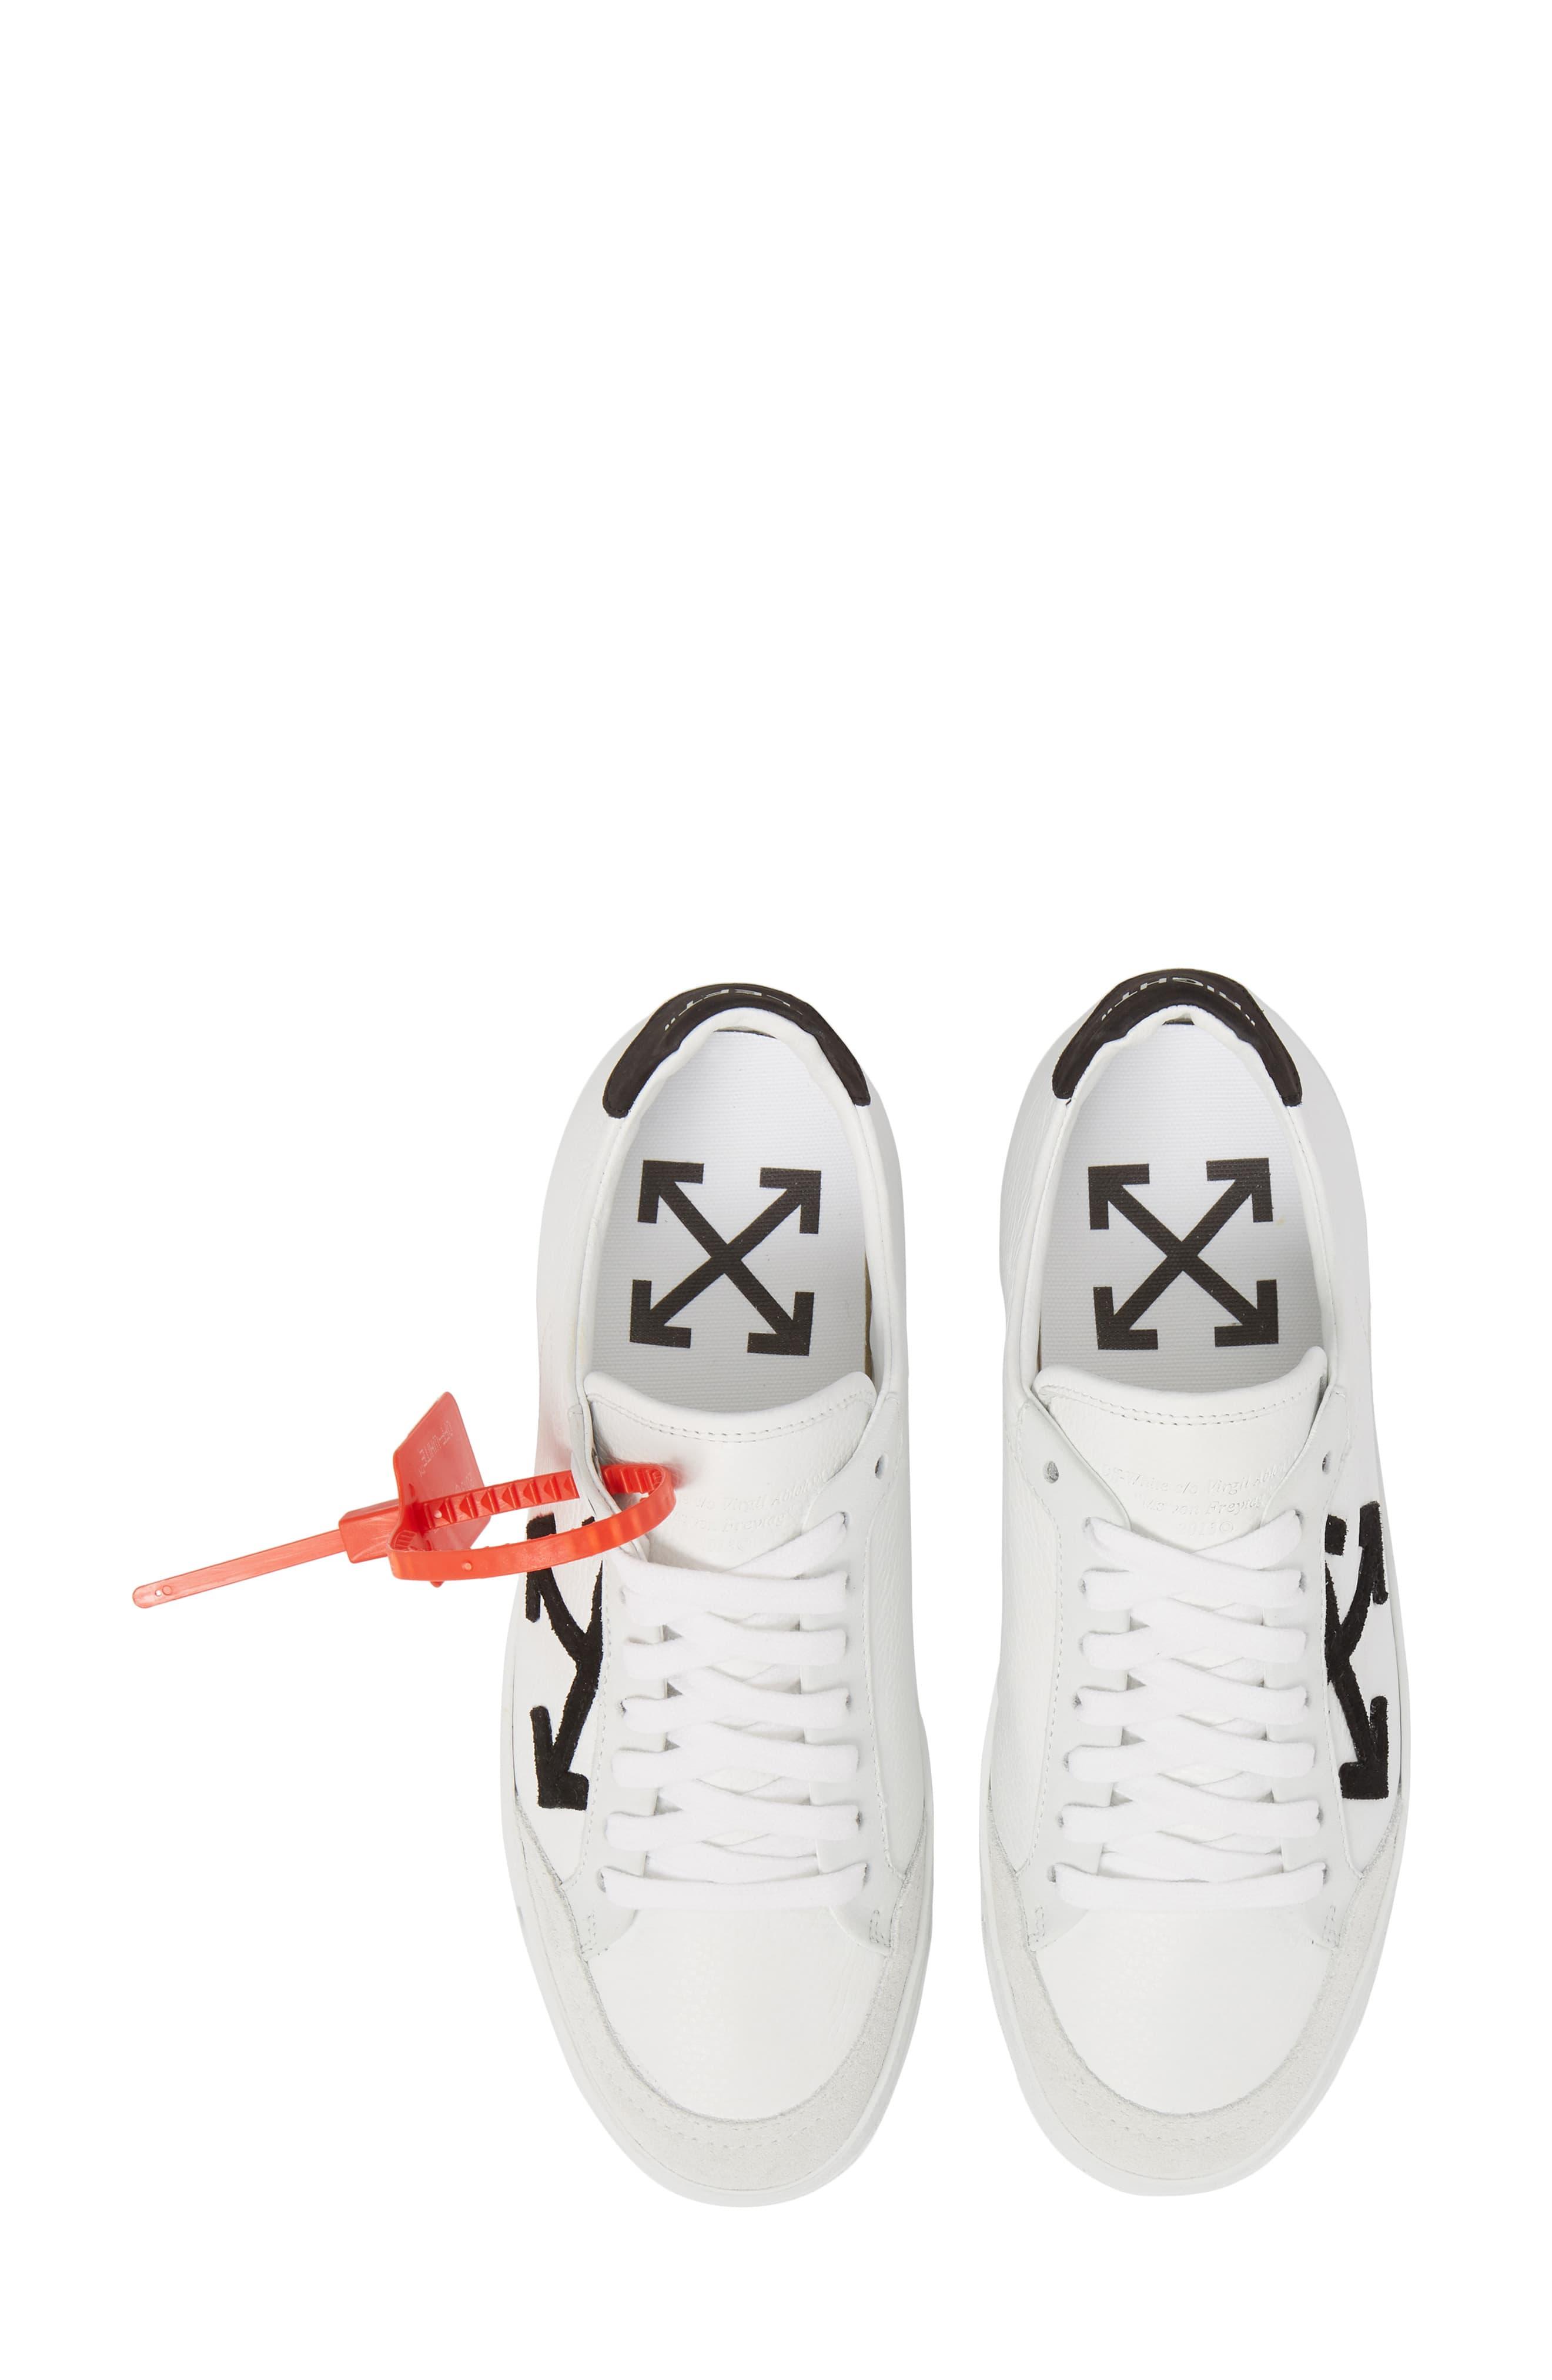 Off-White c/o Virgil Abloh Leather Arrow Sneaker in White Black (White ...